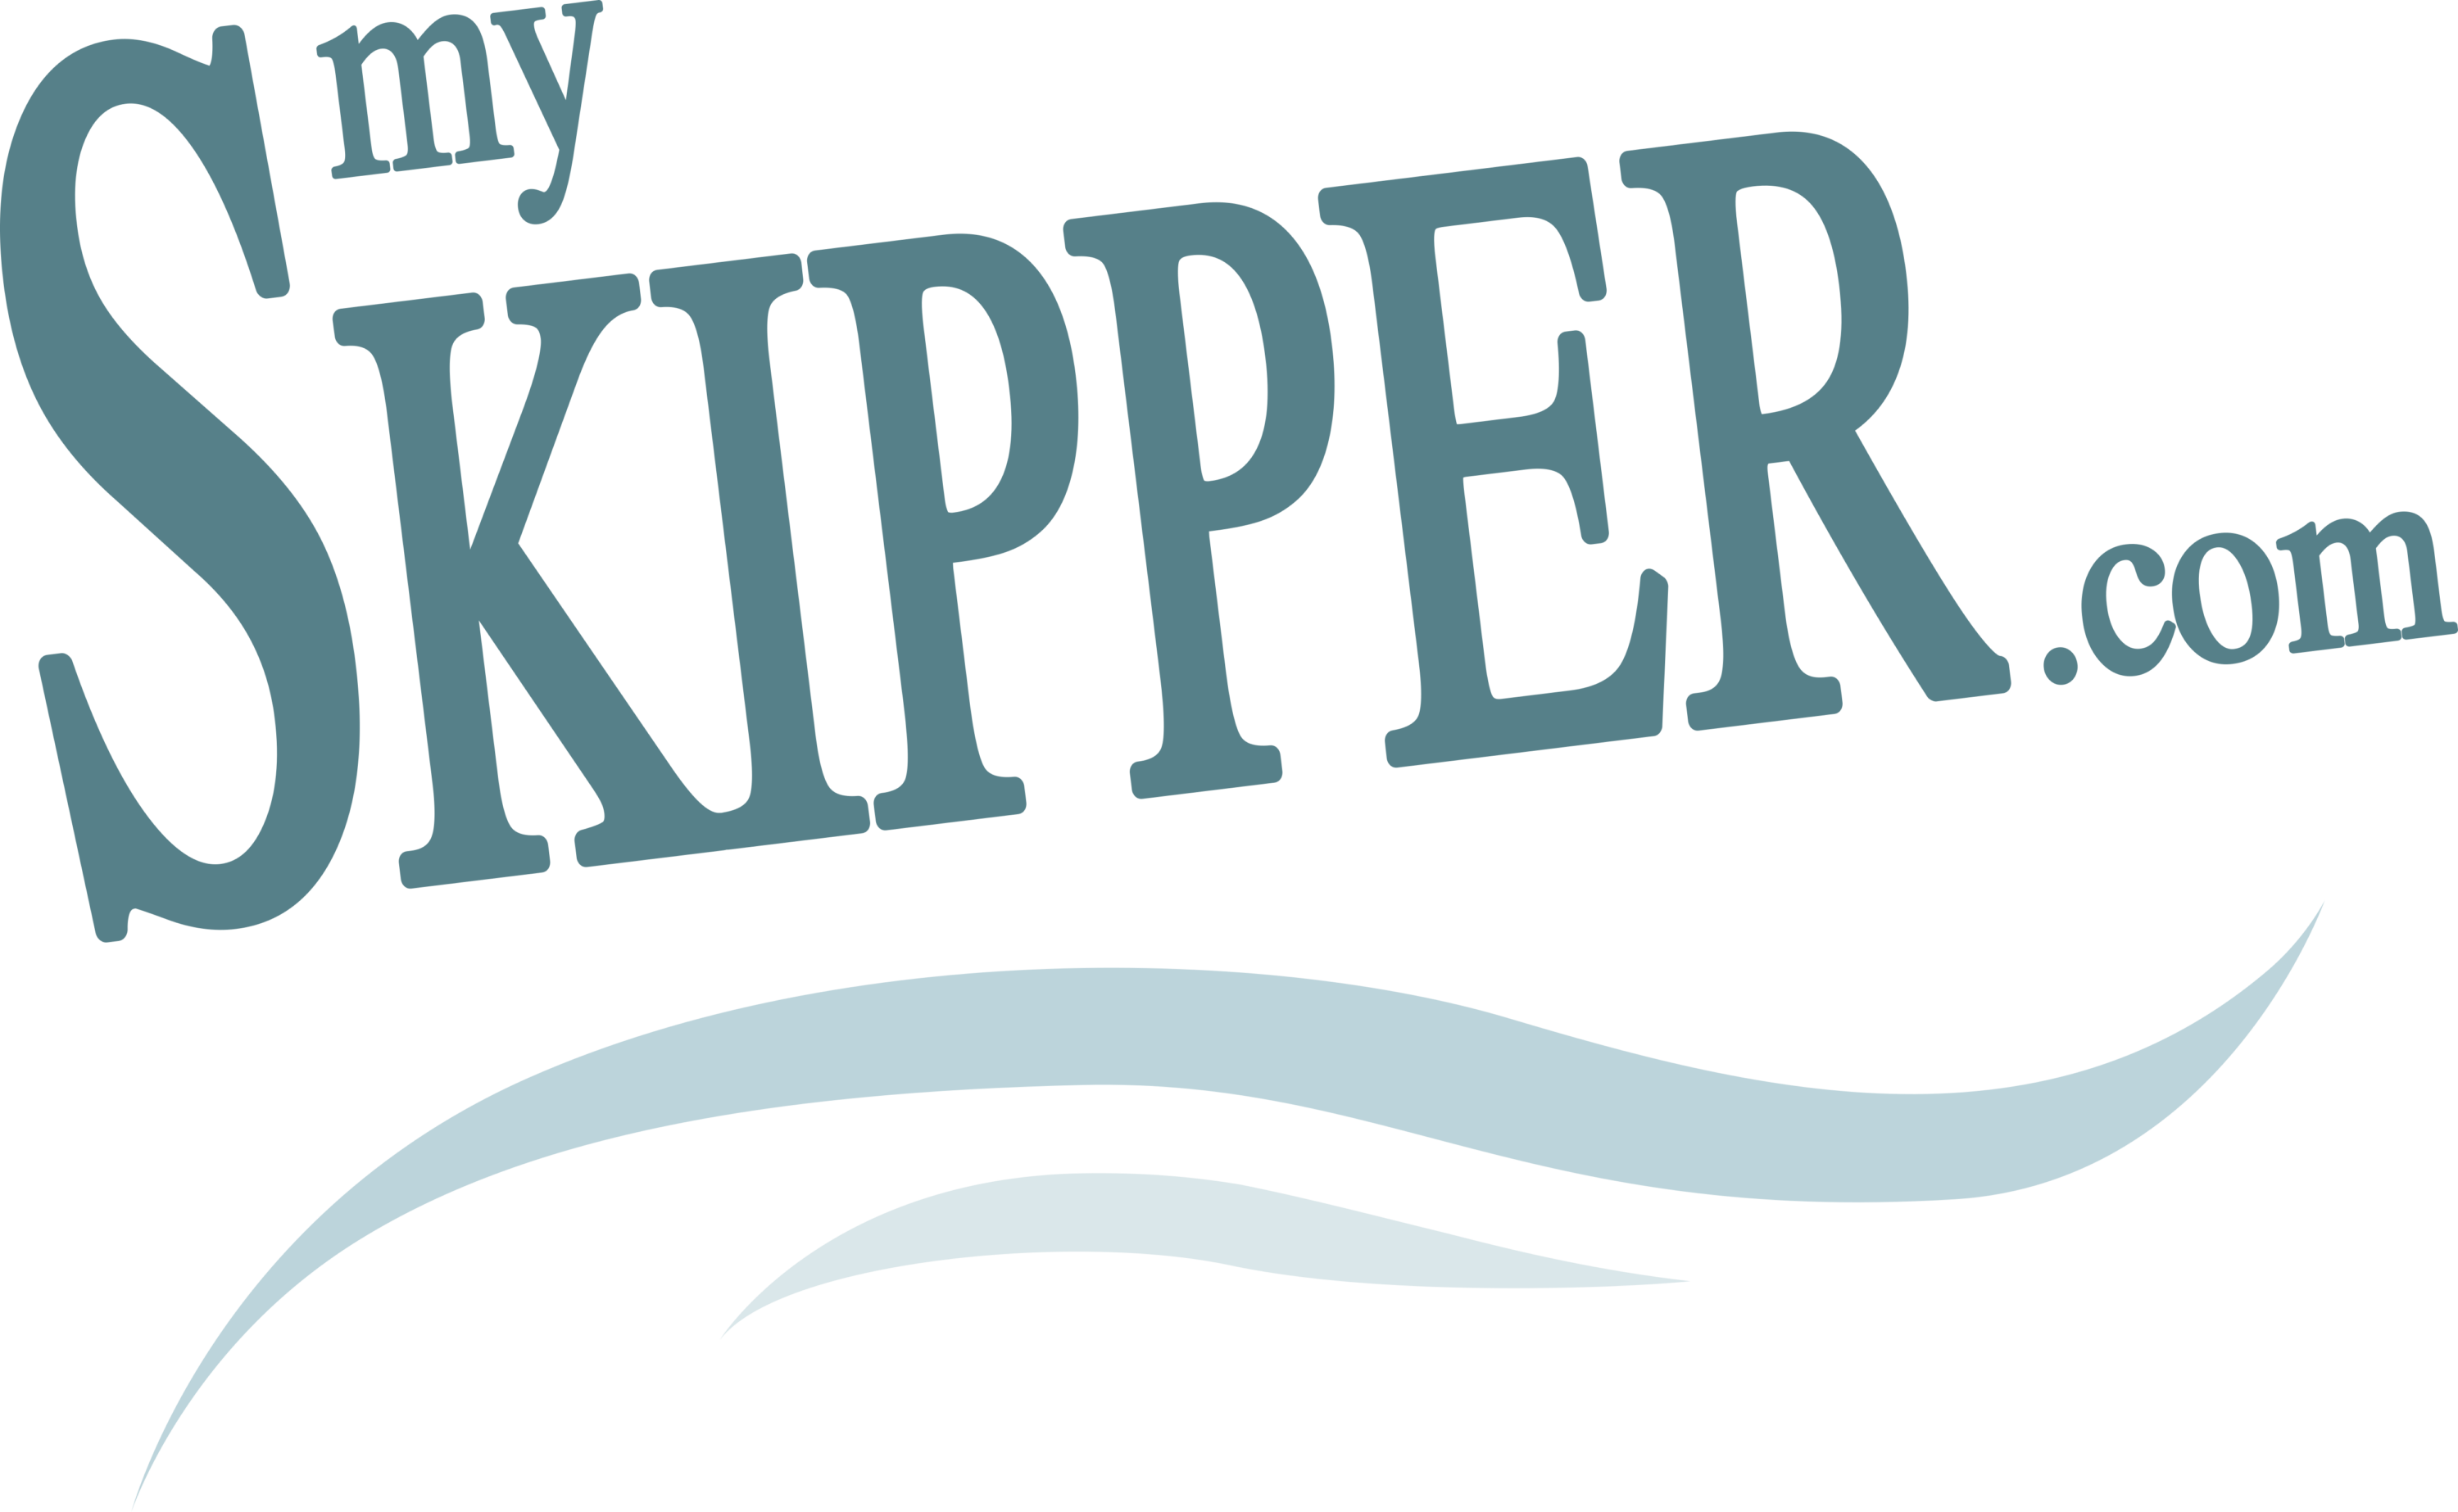 MySkipper.com Logo